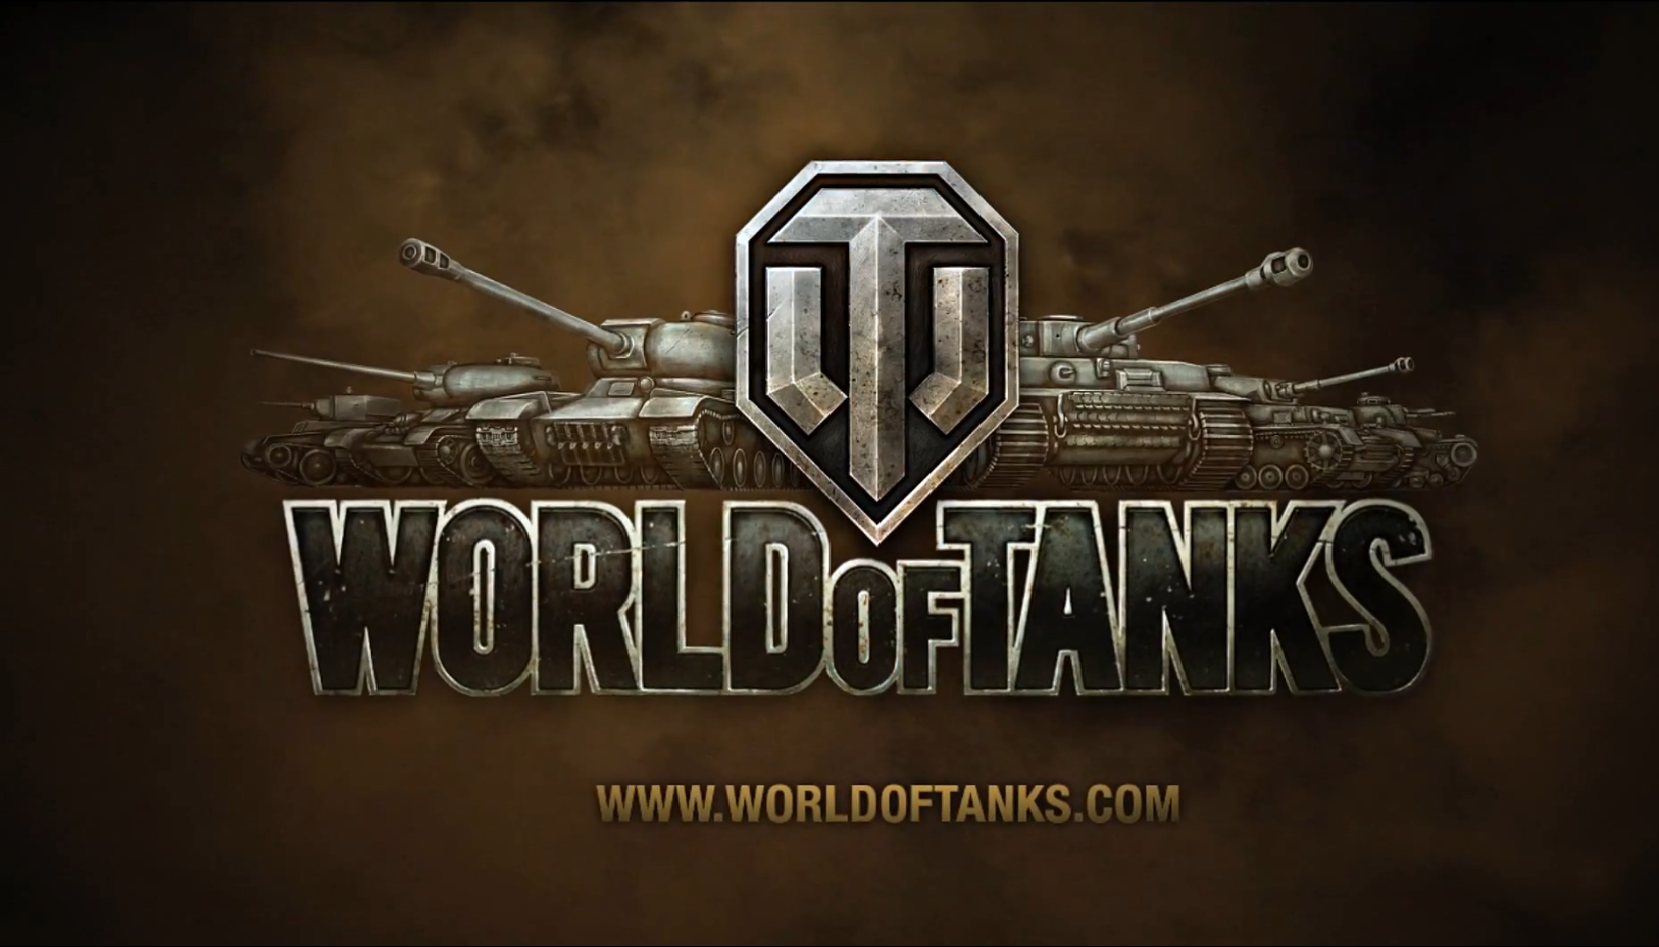 WOT эмблема. Логотип танков. Ворлд оф танк. Эмблема игры World of Tanks.